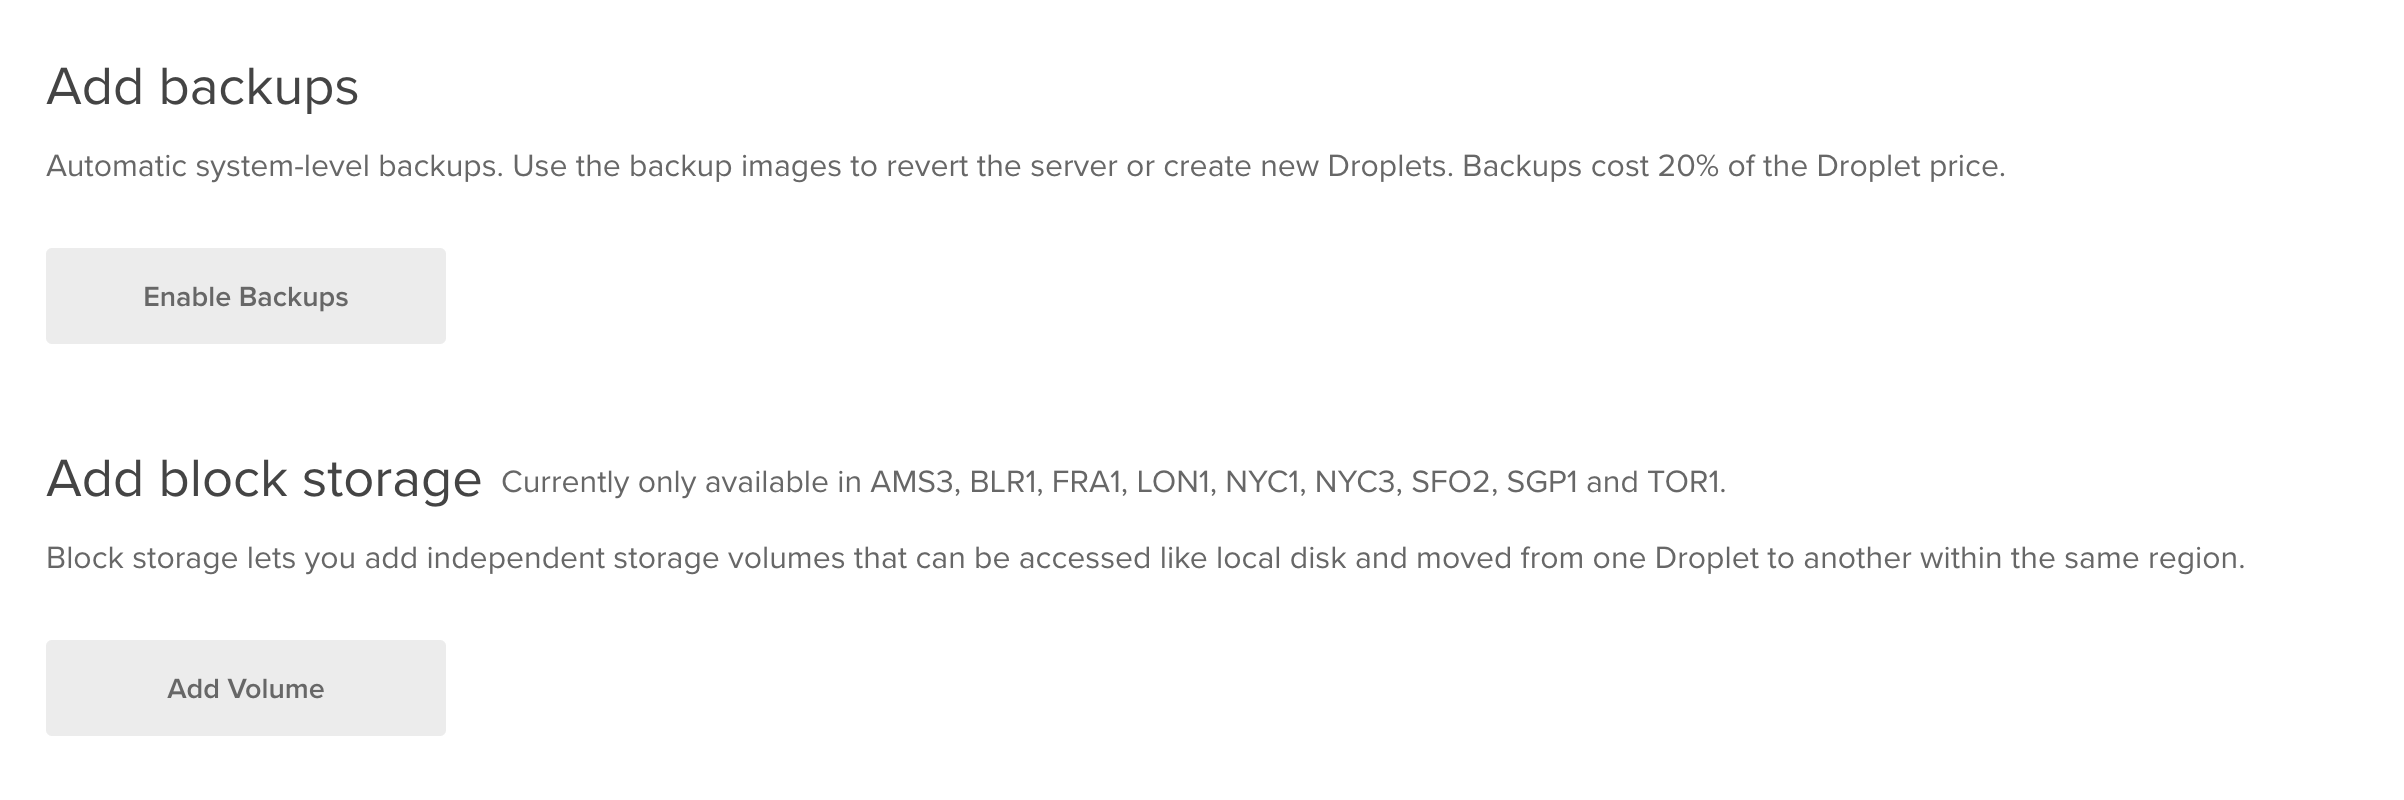 backup and block storage options